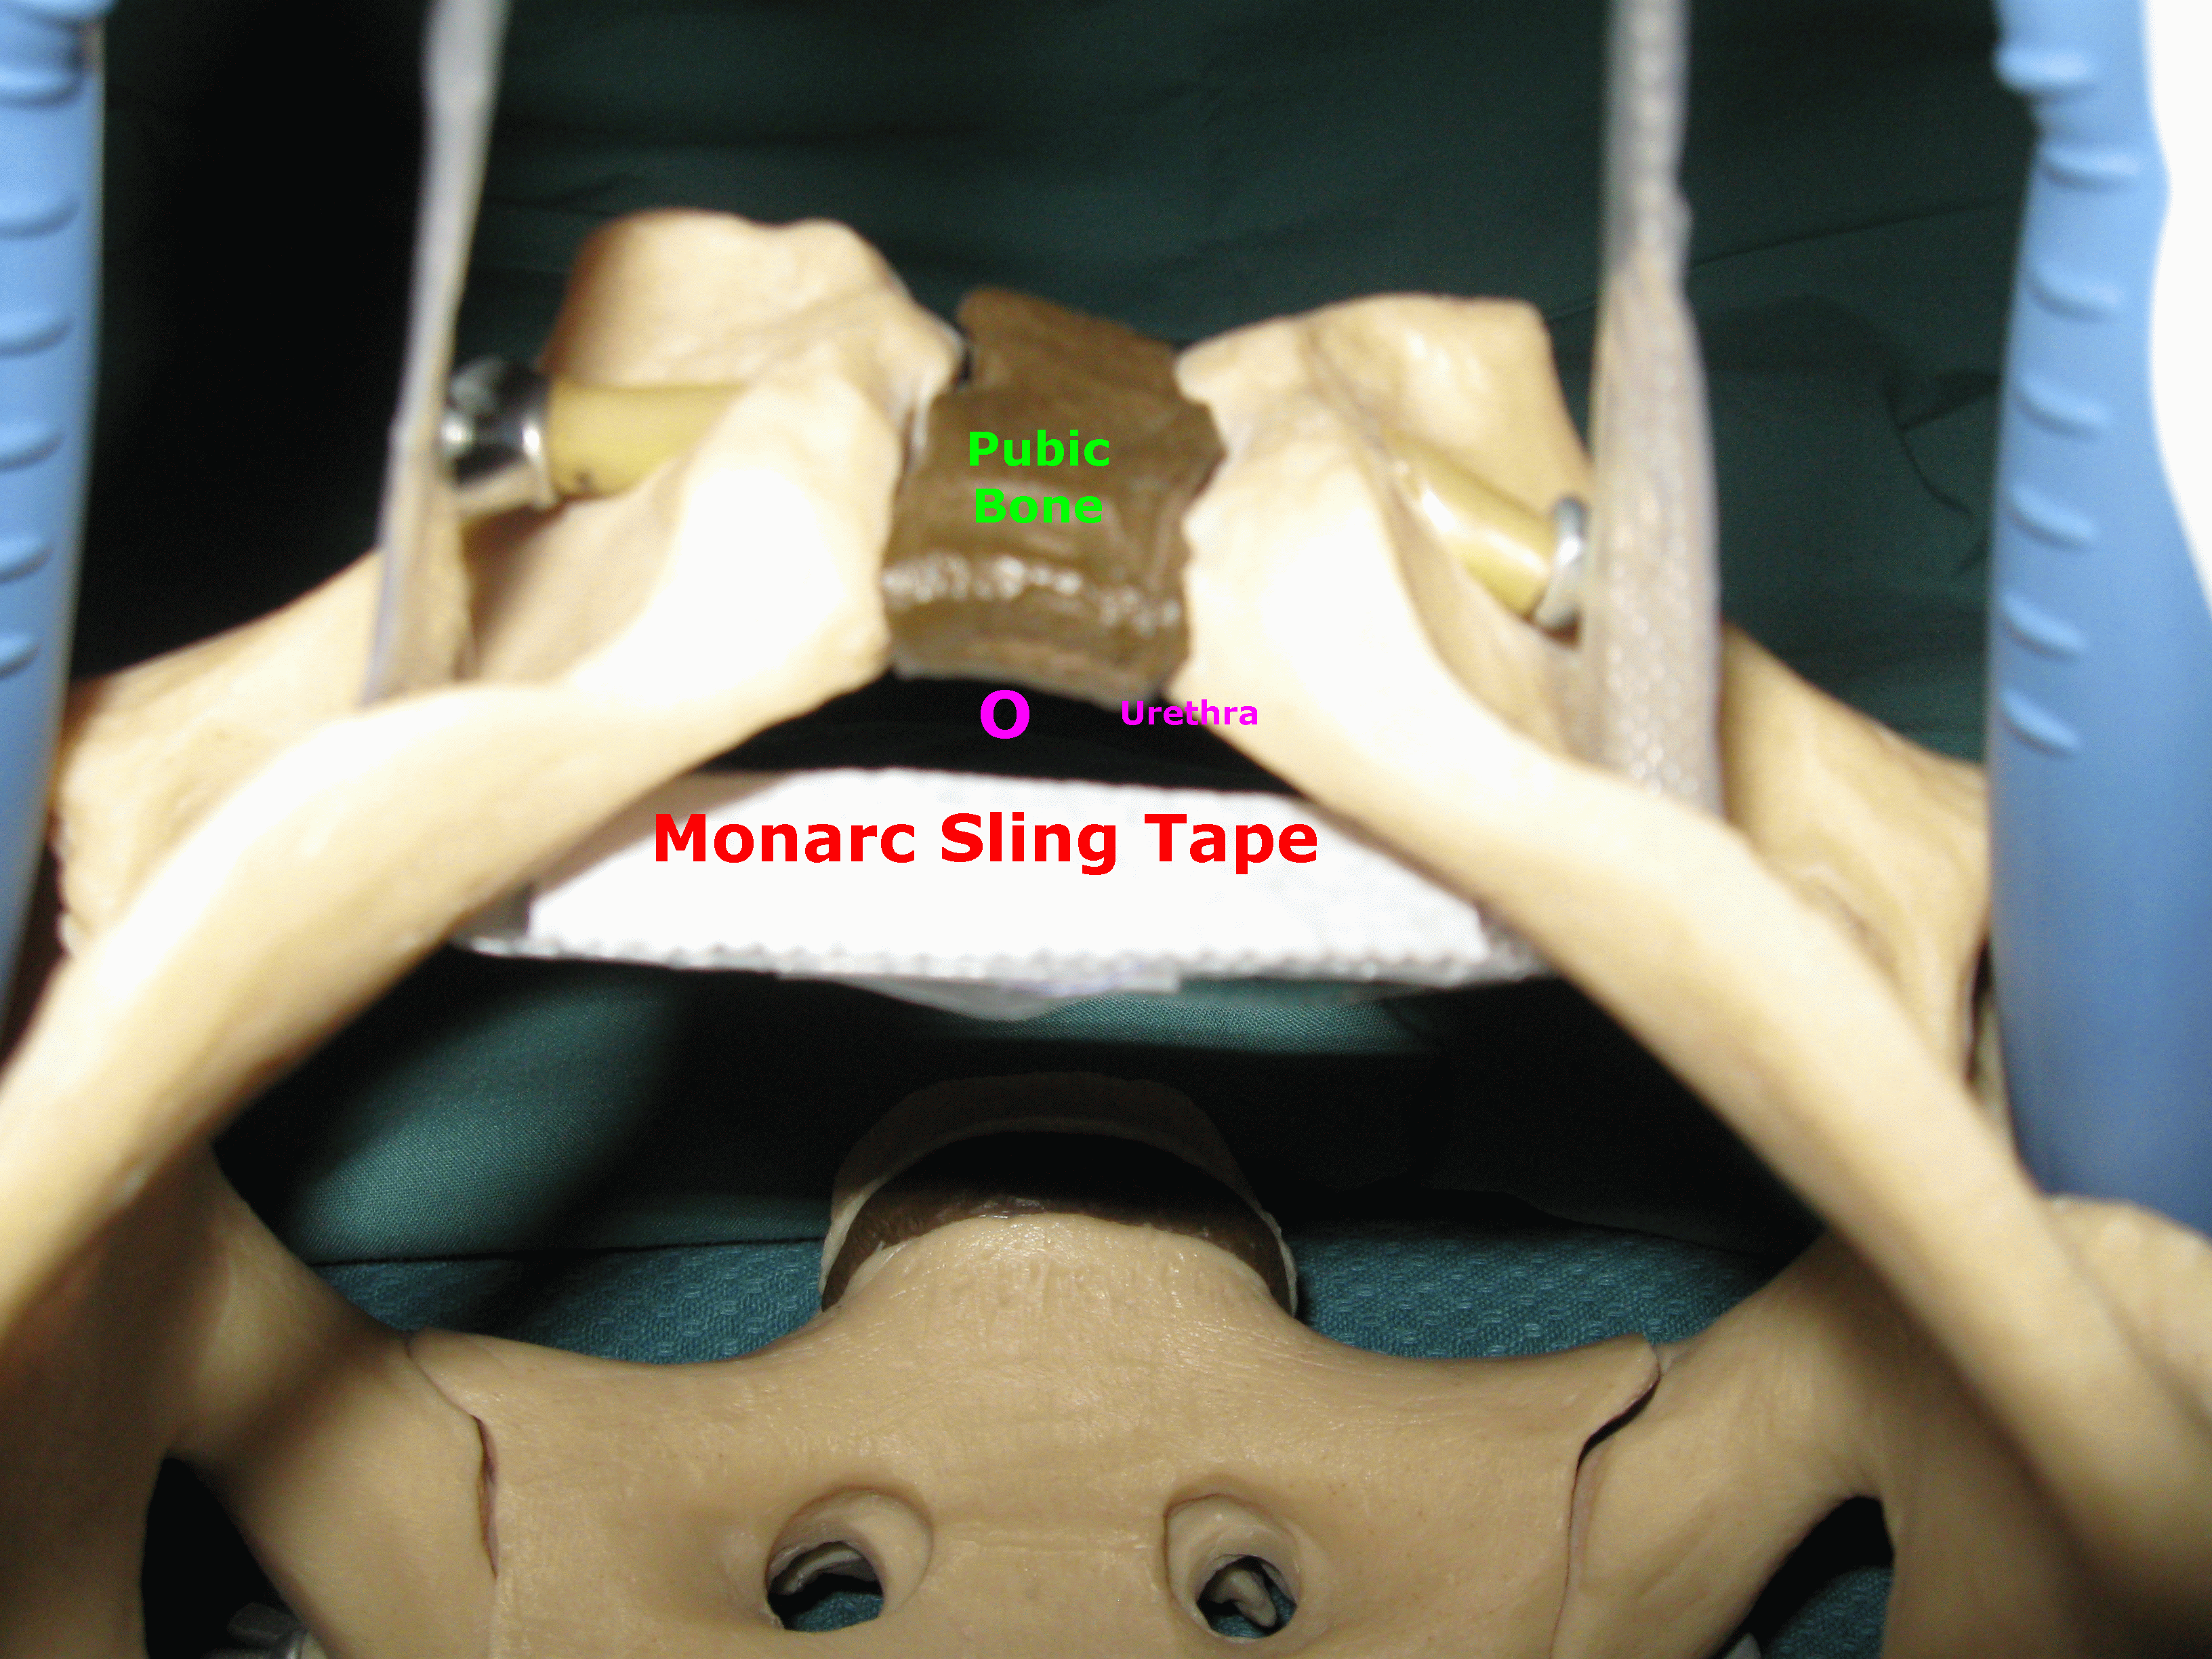 Monarc Sling Tape in Obturator Foramen Serag Youssif1